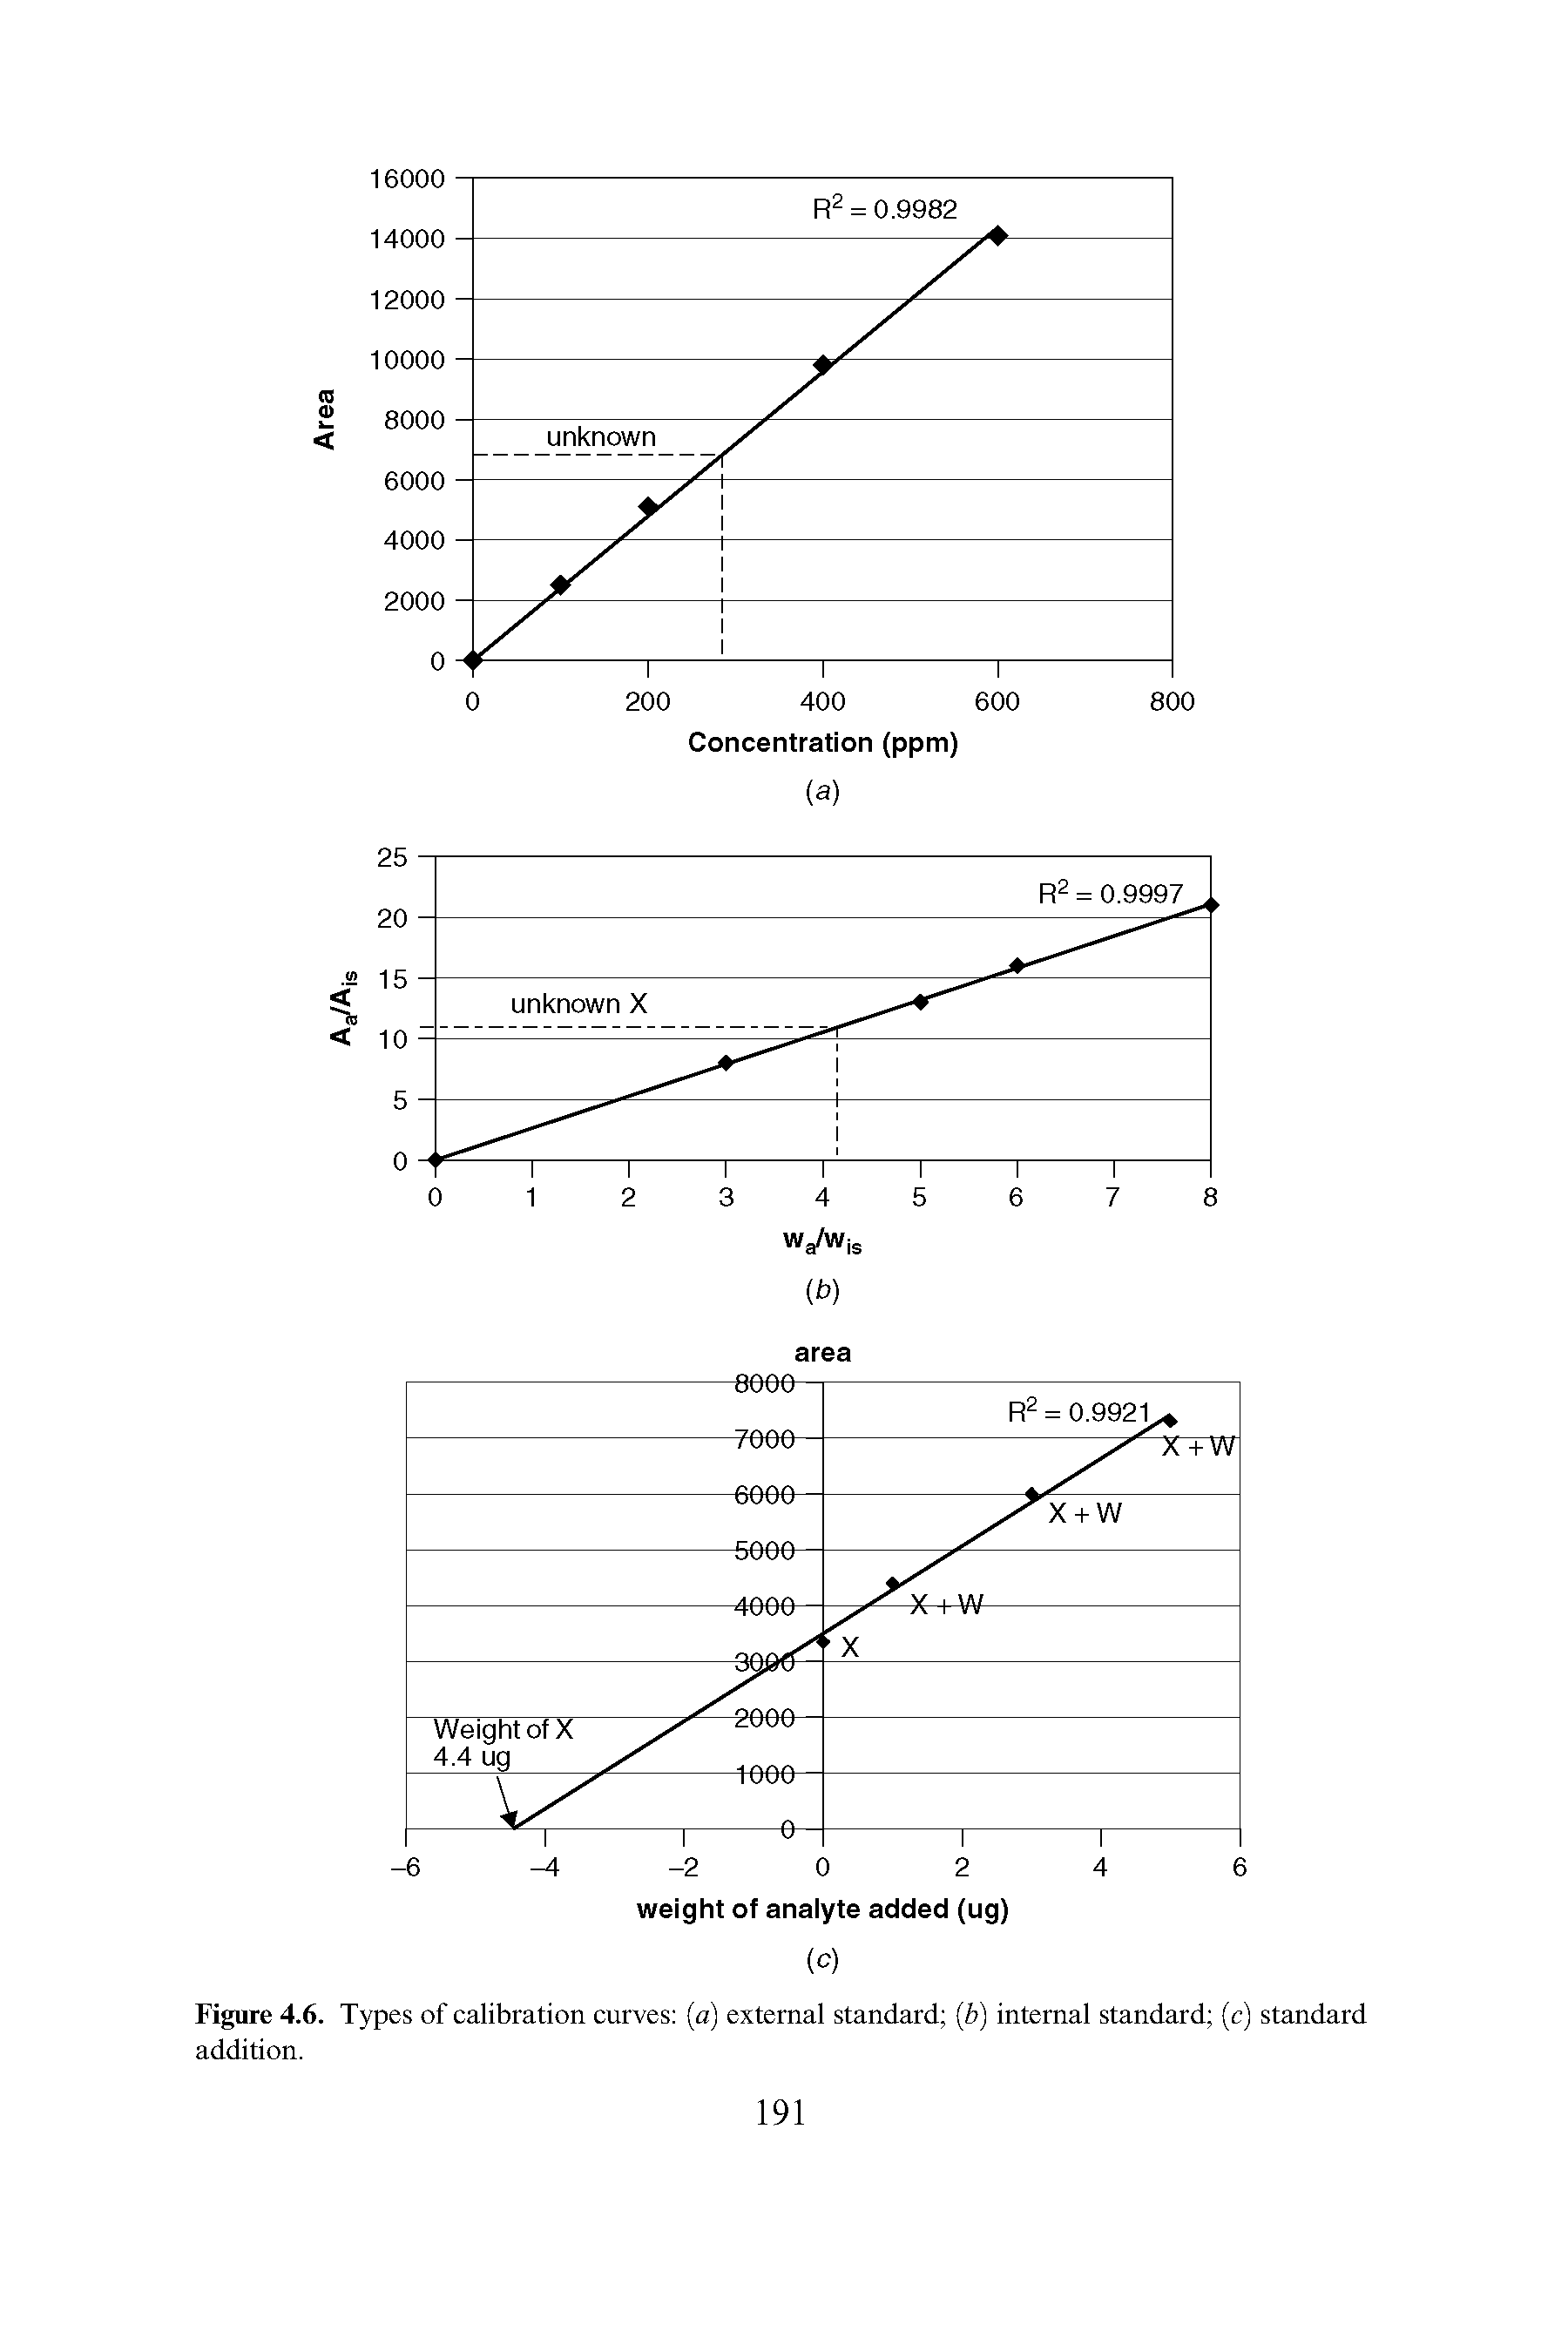 Figure 4.6. Types of calibration curves (a) external standard (b) internal standard (c) standard addition.